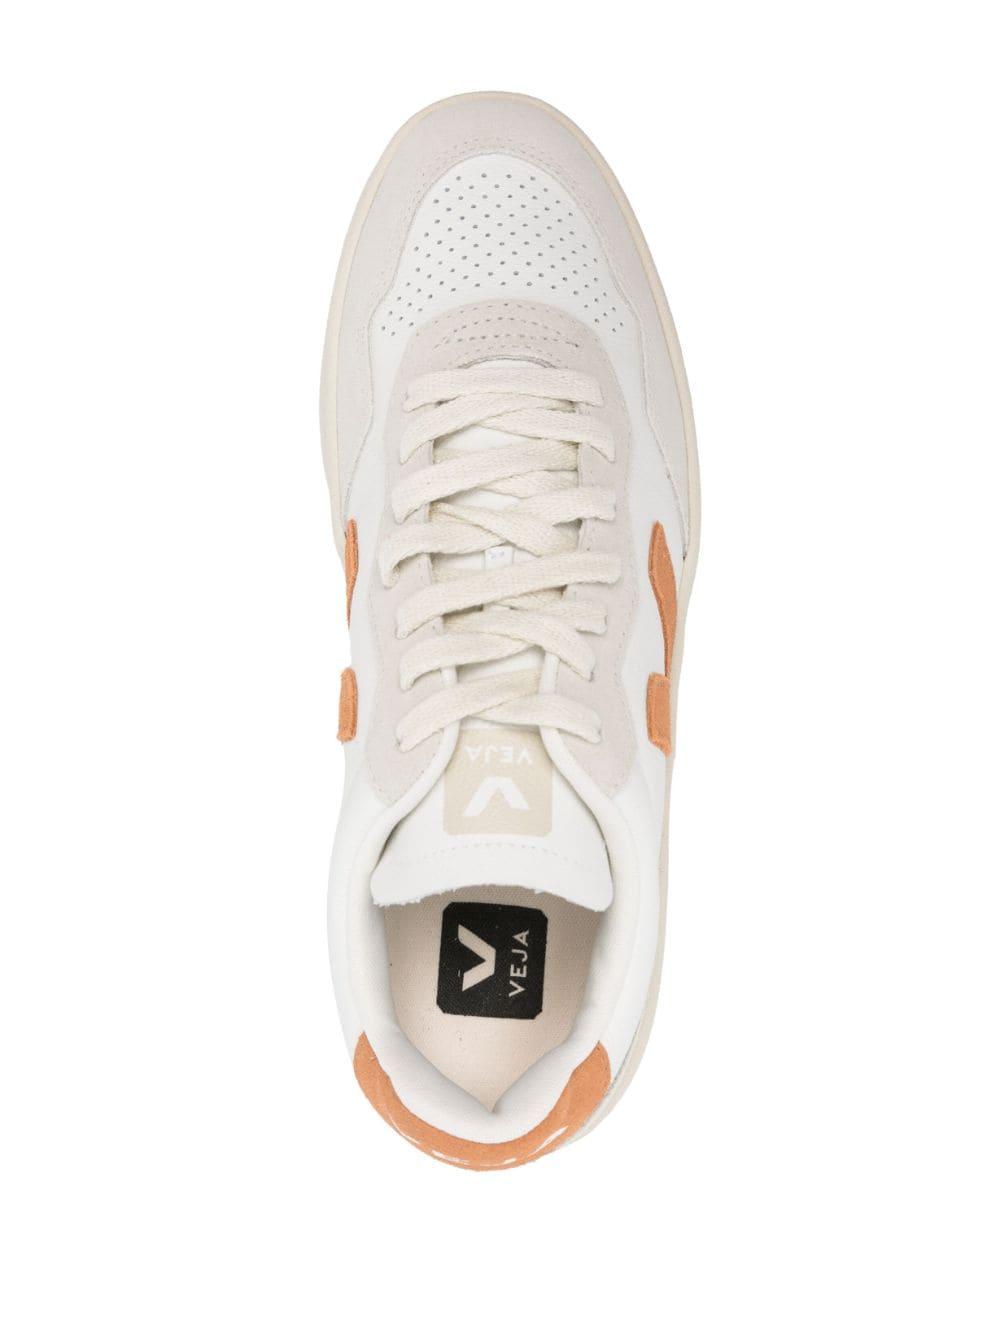 Veja V-90 Leather Sneakers in White | Lyst